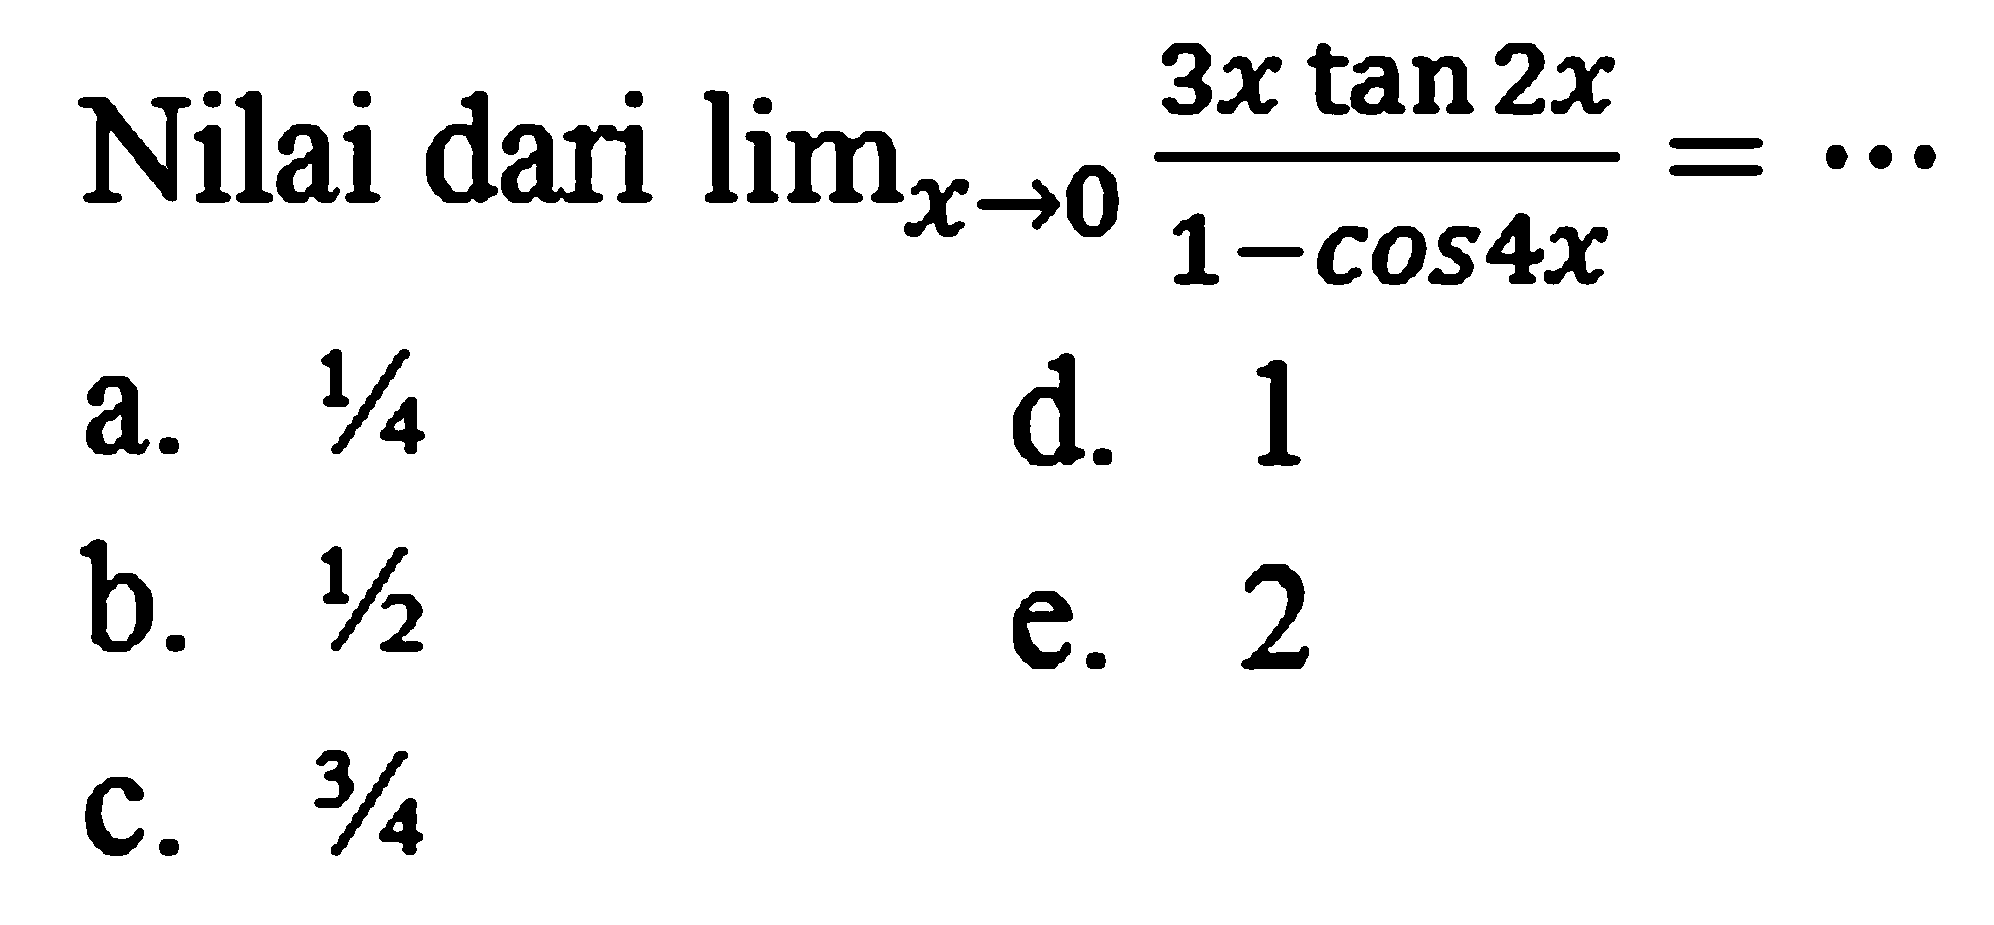 Nilai dari limit x->0 (3x tan 2x)/(1-cos 4x) =